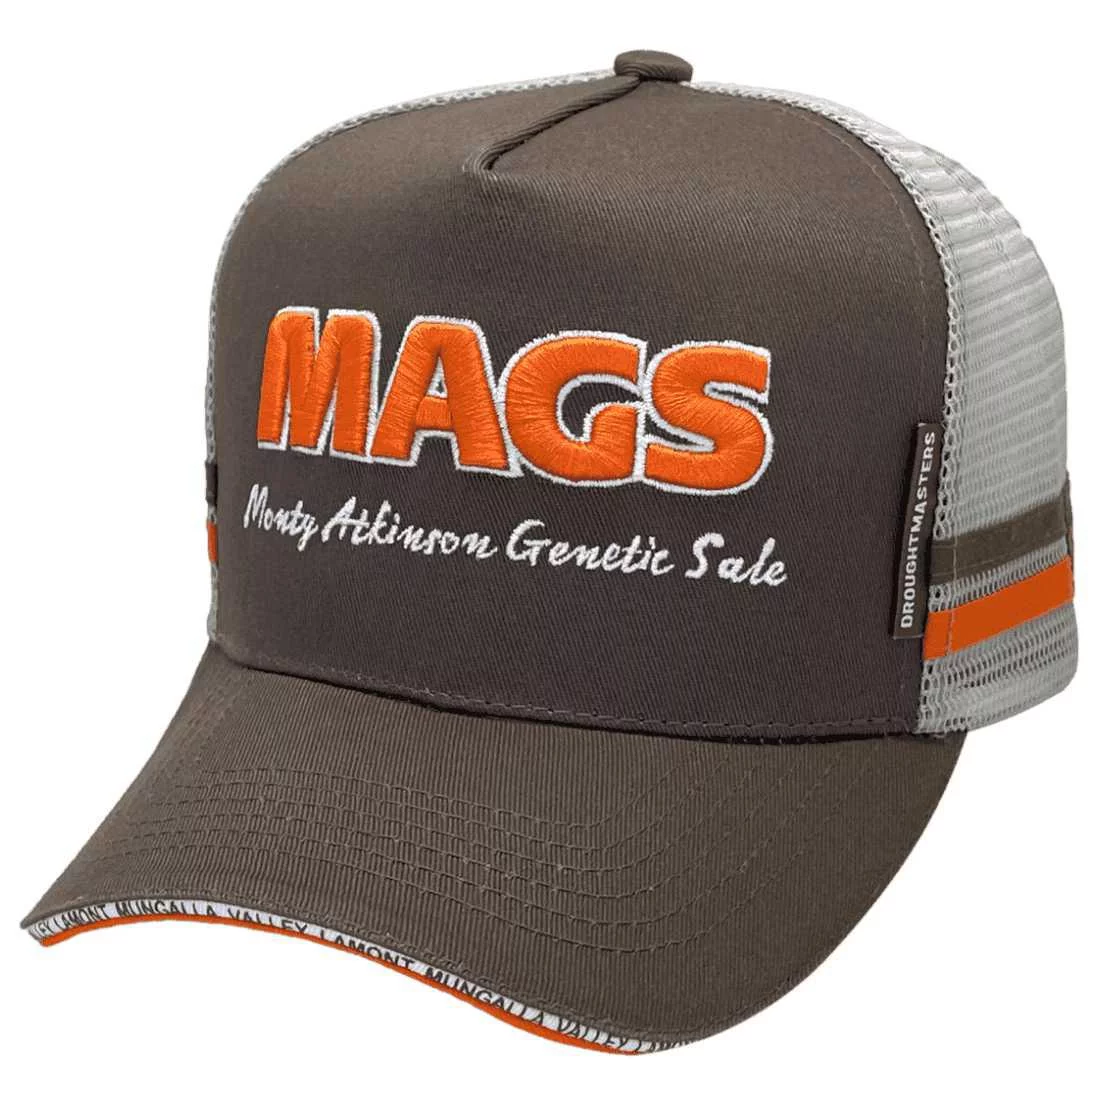 MAGS Monty Atkinson Genetic Sale Ipswich Qld HP Original Power Aussie Trucker Hat with Australian Head Fit Crown and Double Sidebands Brown Orange